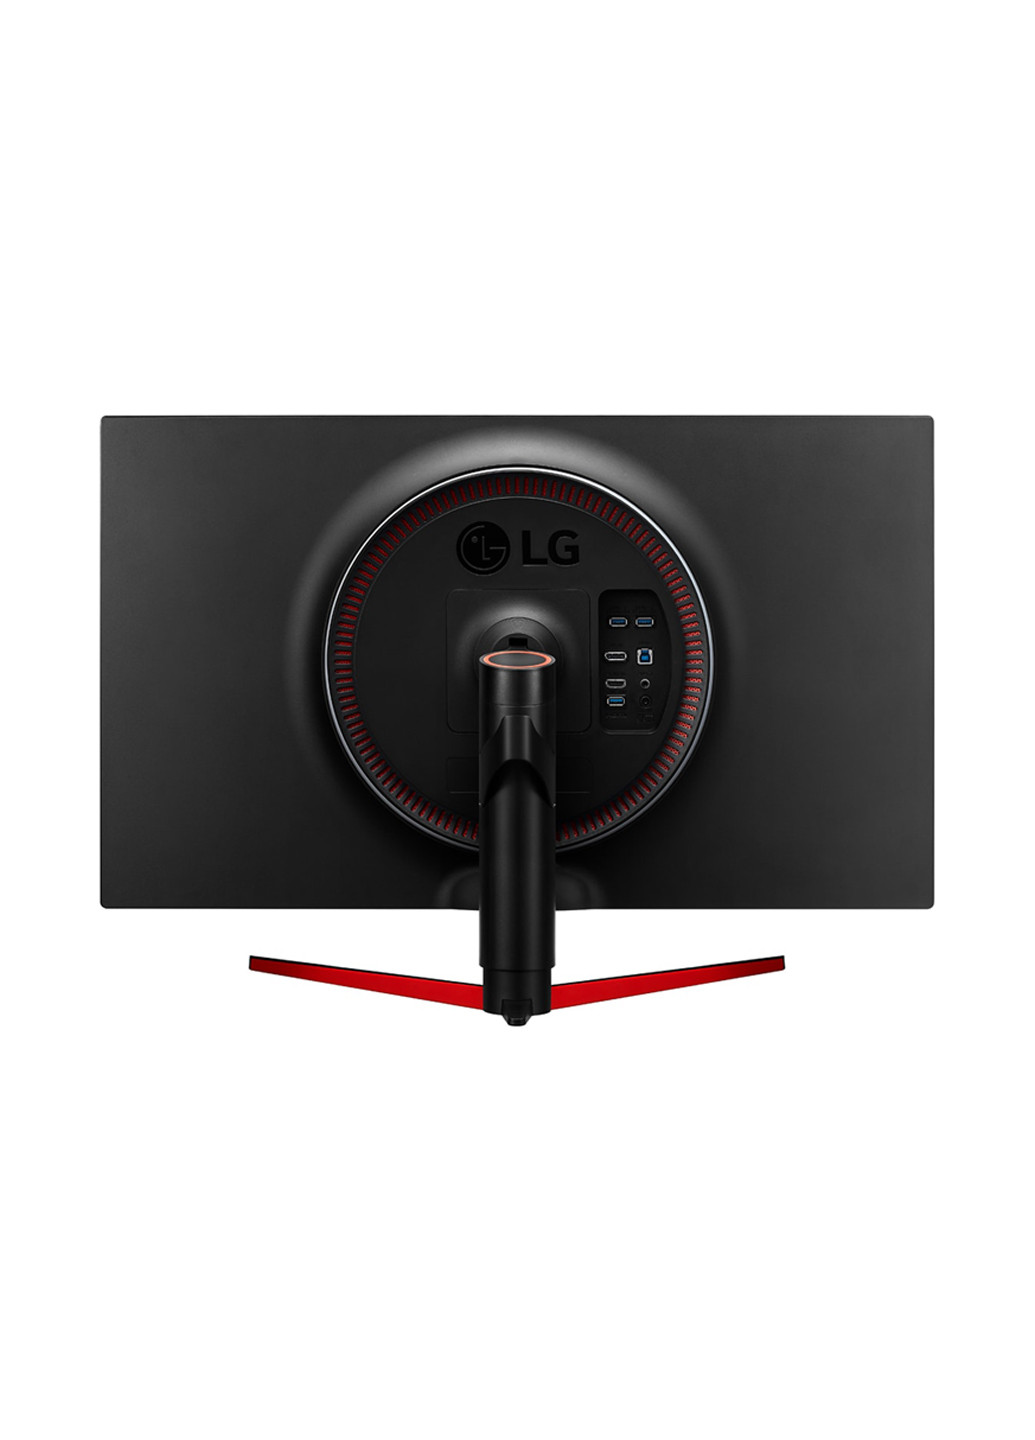 Монитор 31.5" UltraGear™ 32GK850G-B LG монитор 31.5" lg ultragear™ 32gk850g-b (137919724)